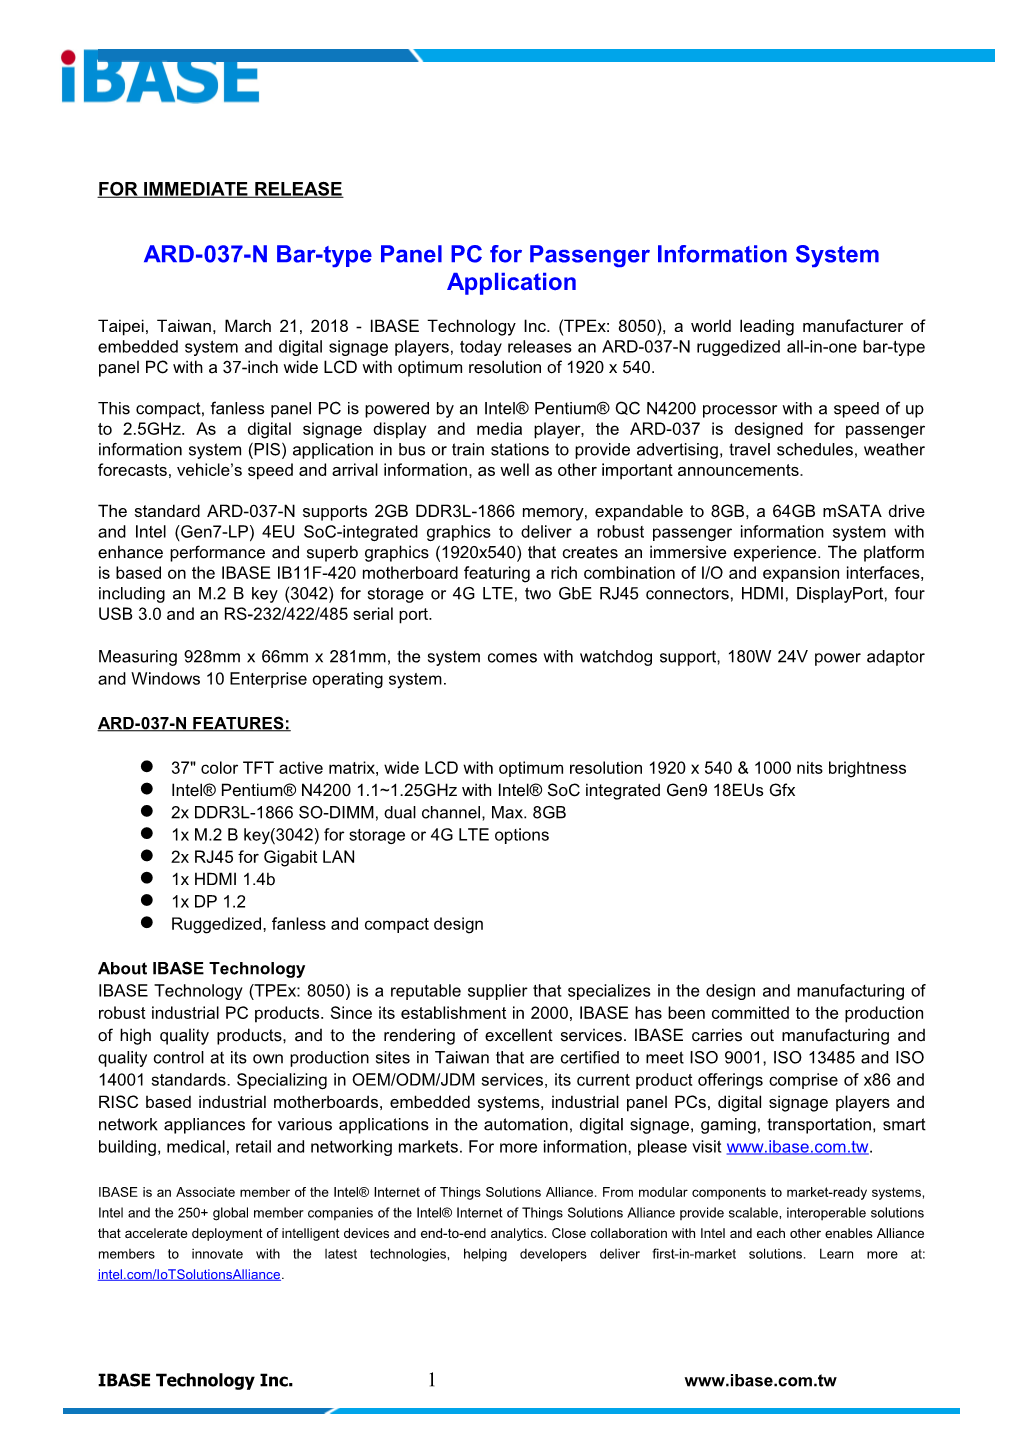 ARD-037-N Bar-Type Panel PC for Passenger Information System Application